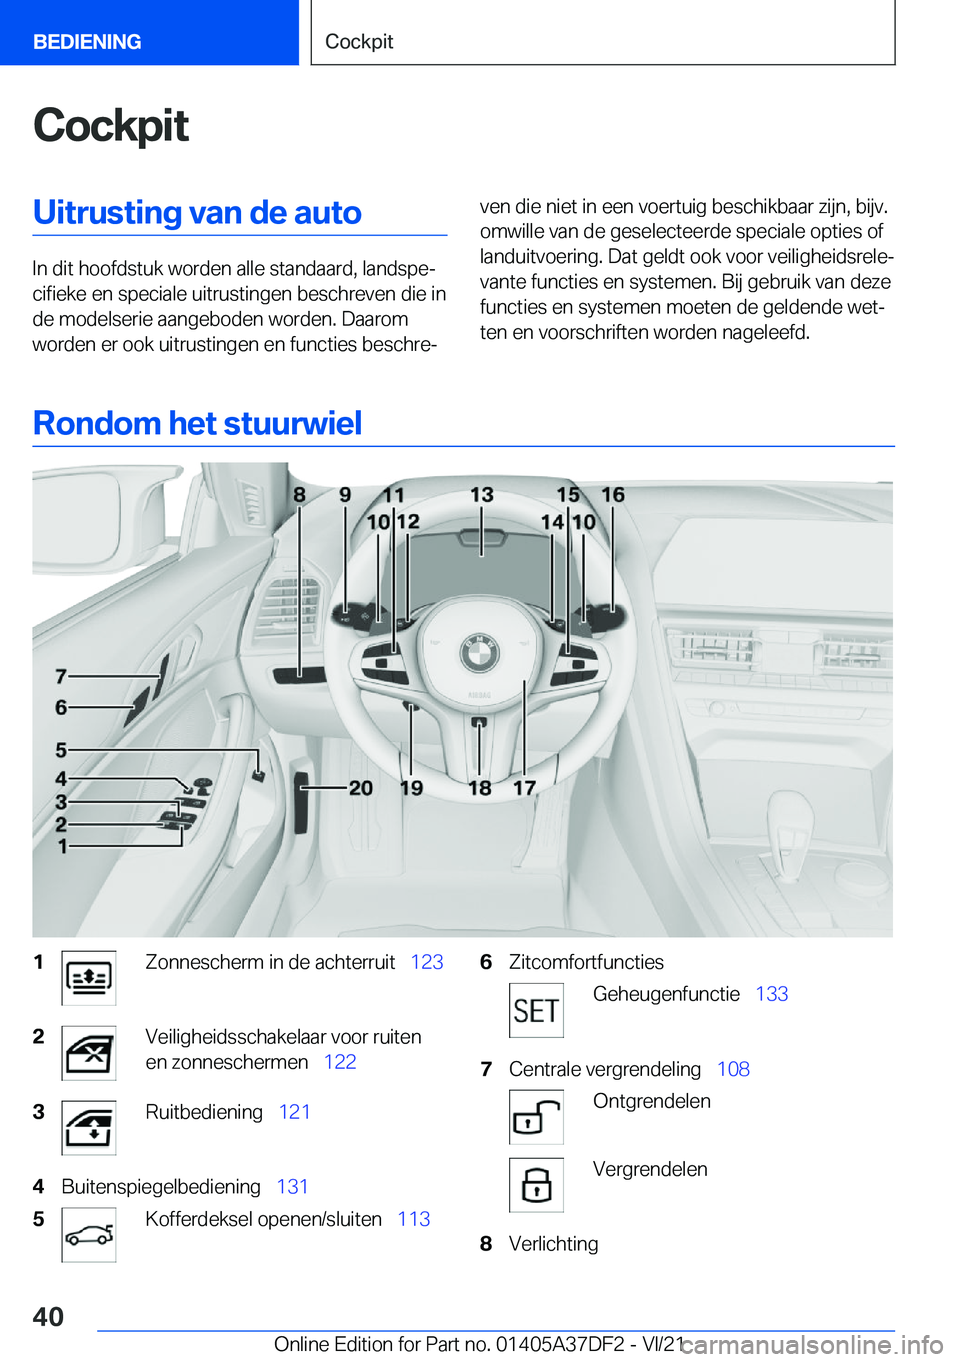 BMW M8 GRAN COUPE 2022  Instructieboekjes (in Dutch) �C�o�c�k�p�i�t�U�i�t�r�u�s�t�i�n�g��v�a�n��d�e��a�u�t�o
�I�n��d�i�t��h�o�o�f�d�s�t�u�k��w�o�r�d�e�n��a�l�l�e��s�t�a�n�d�a�a�r�d�,��l�a�n�d�s�p�ej�c�i�f�i�e�k�e��e�n��s�p�e�c�i�a�l�e��u�i�